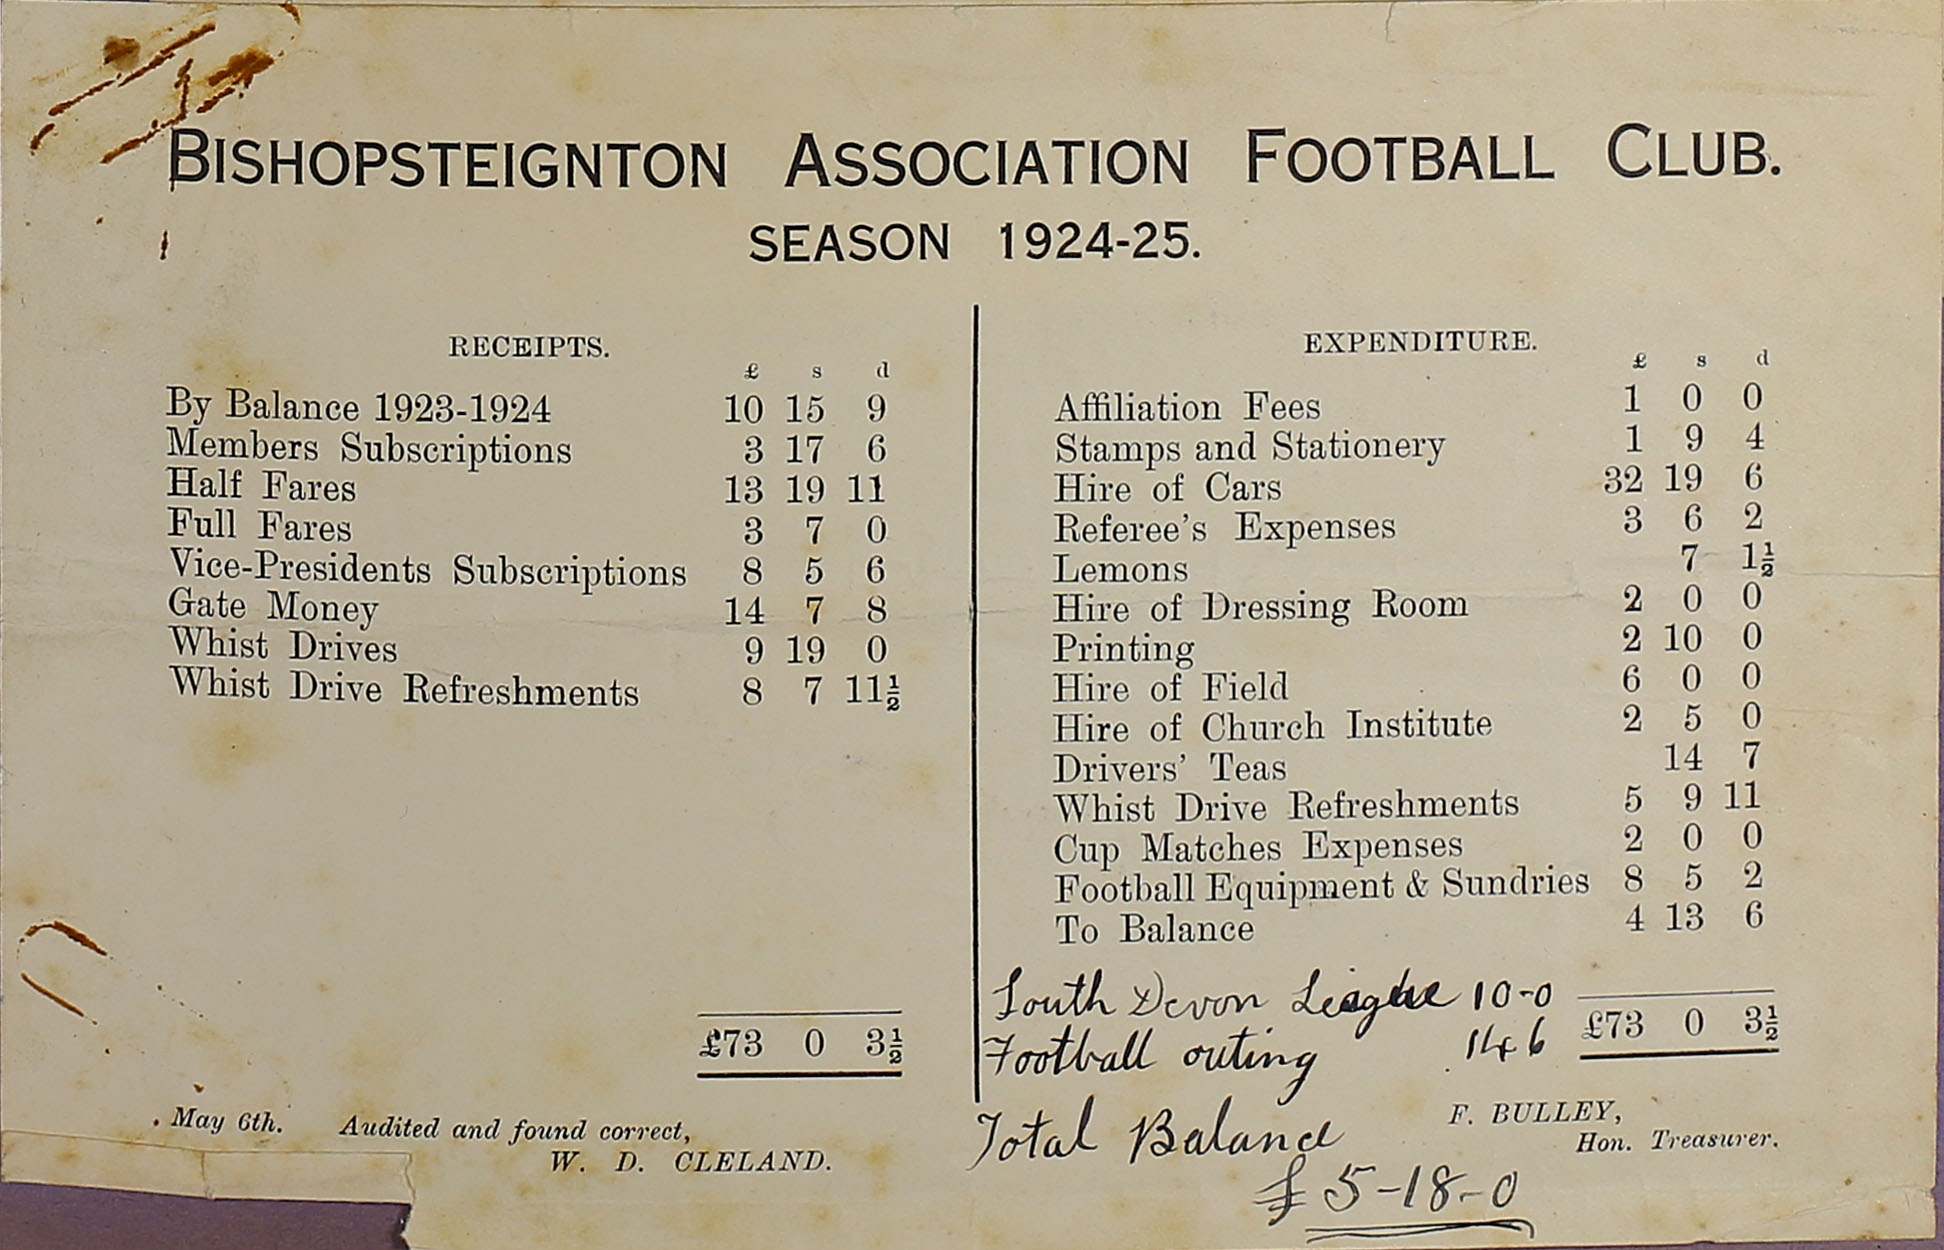 Bishopsteignton Association Football Club Season 1924-25 balance sheet.